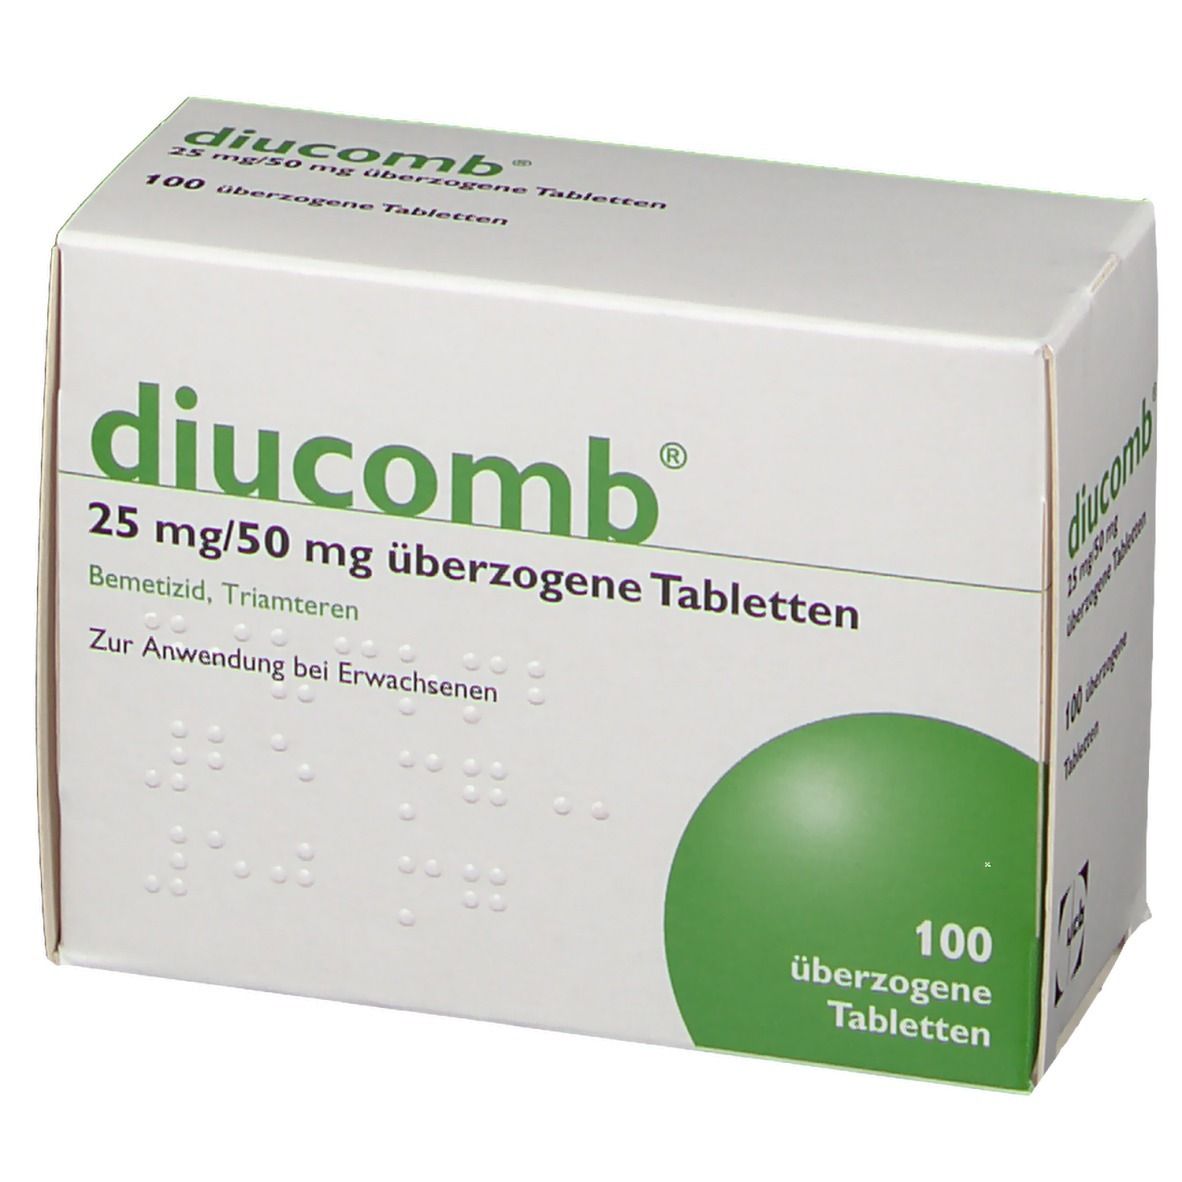 diucomb® 25 mg/50 mg